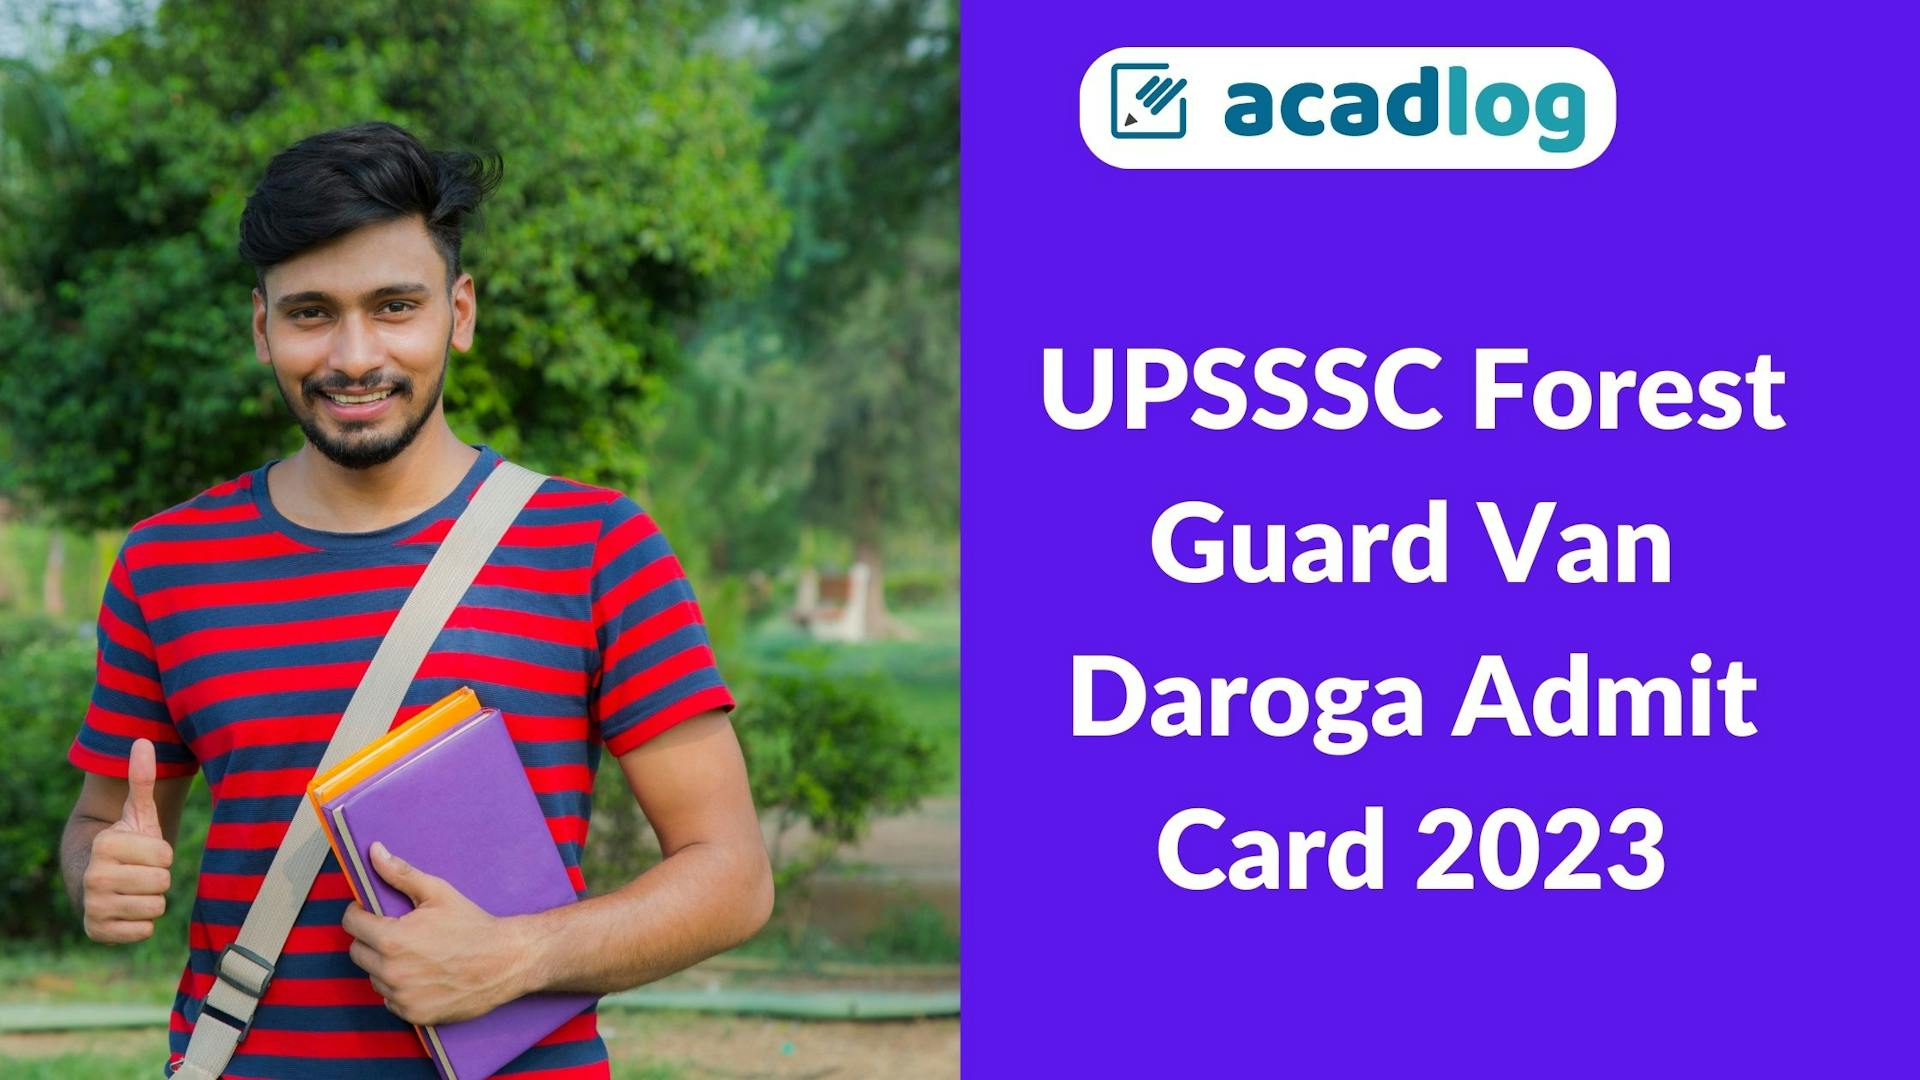 Acadlog: UPSSSC Uttar Pradesh Forest Guard (Van Daroga) Recruitment 2022 Exam Admit Card, Pay Main Exam Fee